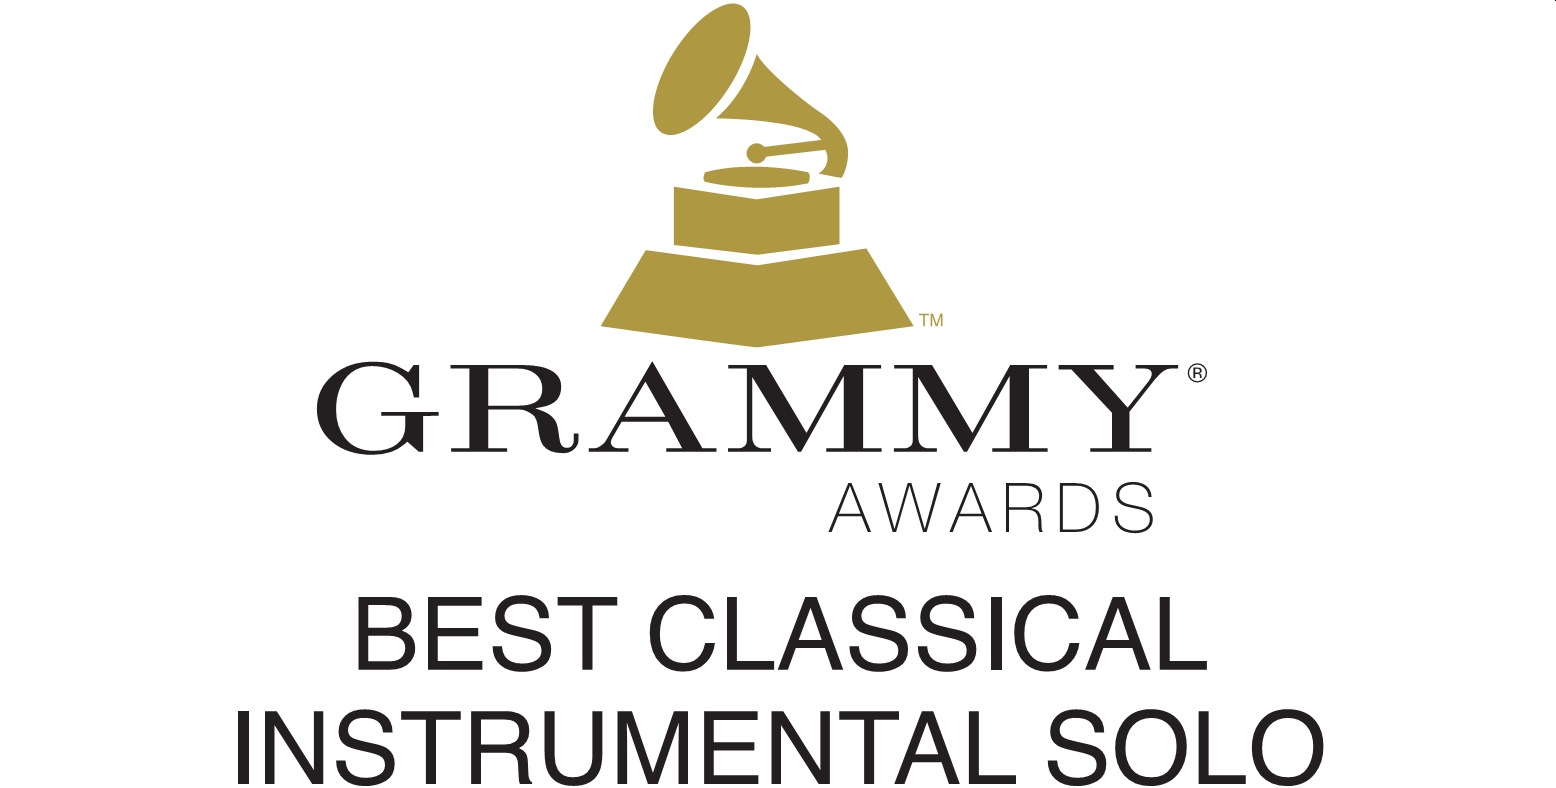 Grammy Award: 'Best Classical Instrumental Solo' (2013)